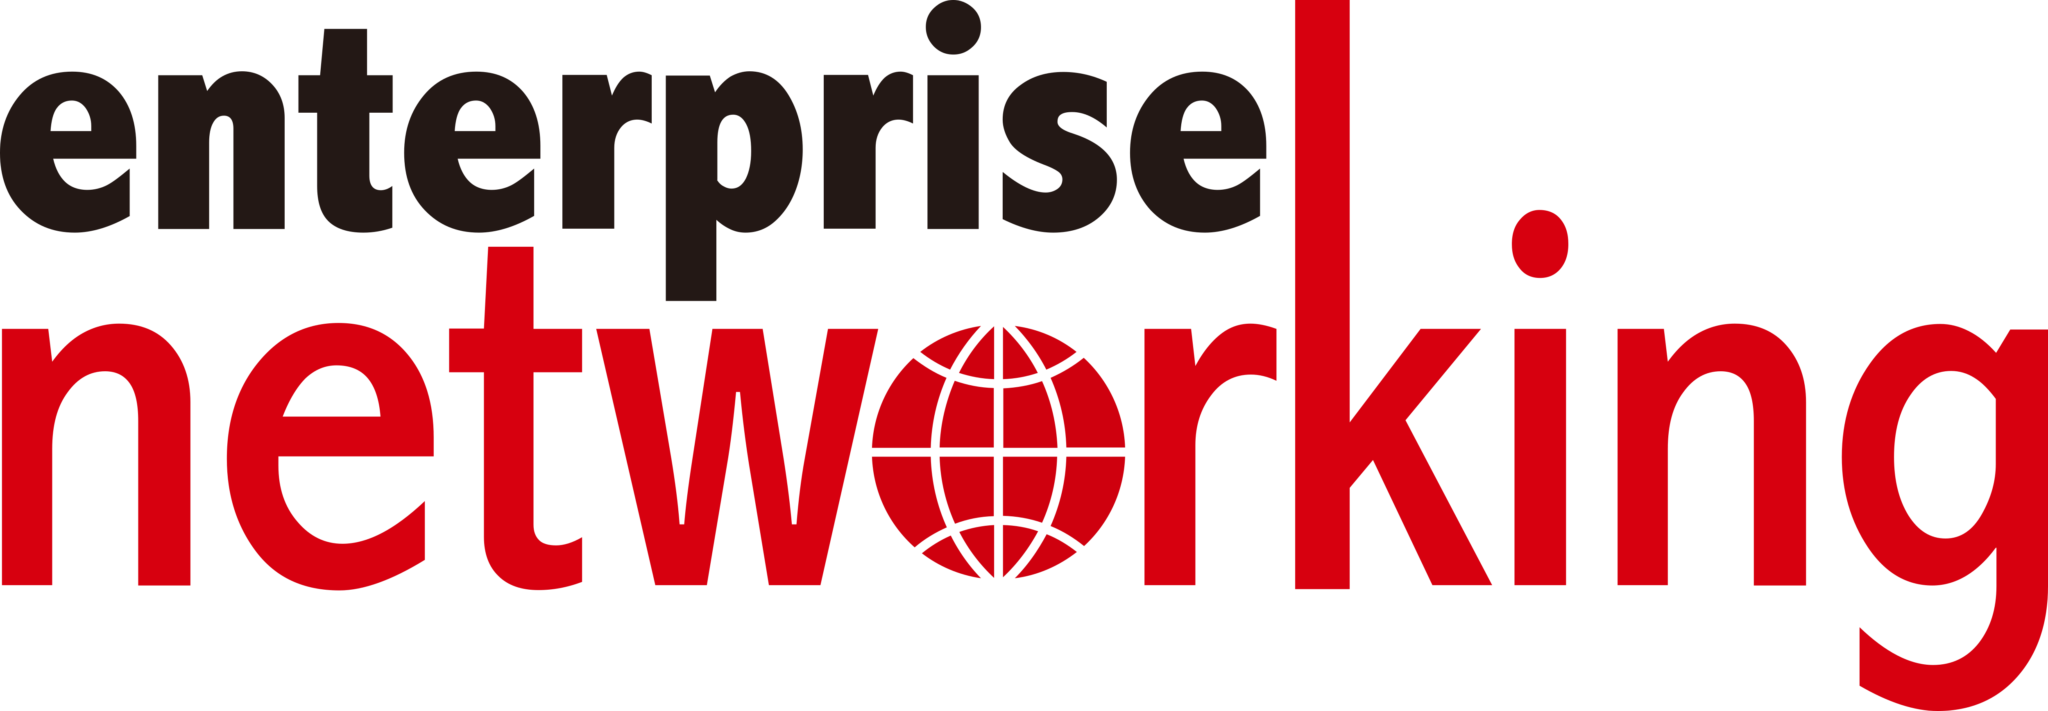 Логотип нетворкинга. Trud lan лого. IP net logo. Famall Network logo PNG. Enterprise networks